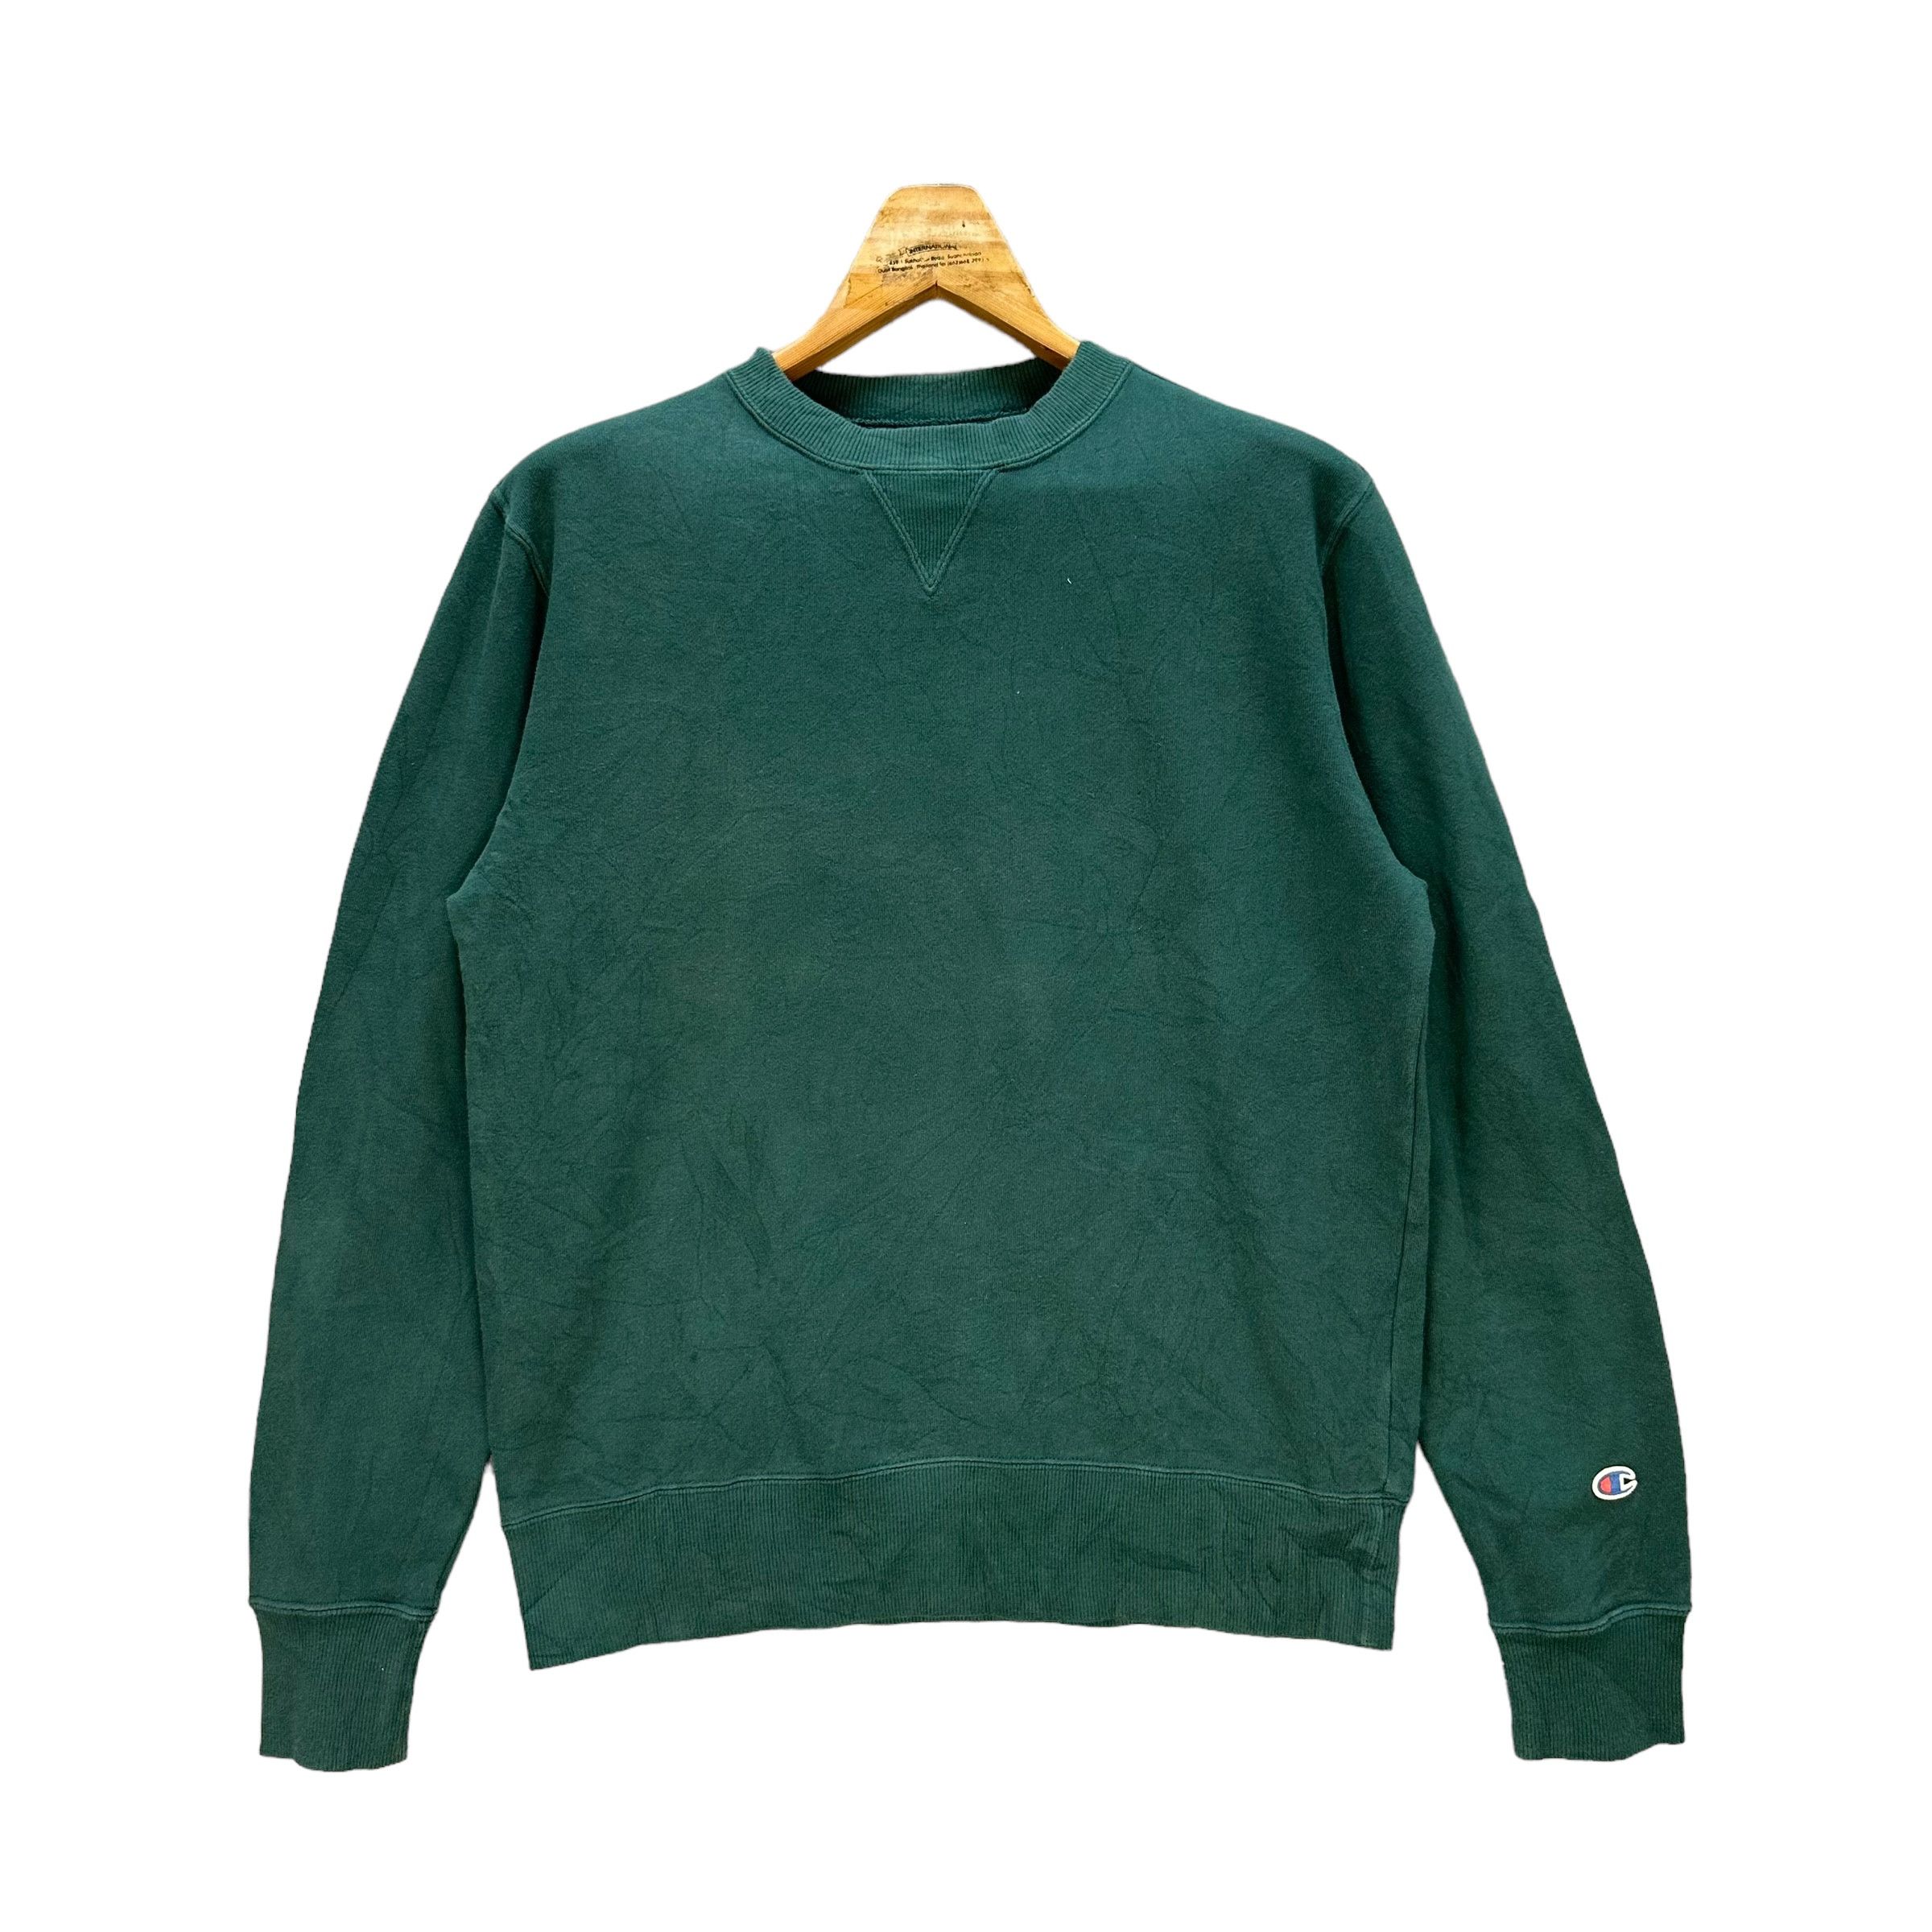 Champion Green Sweatshirts #9125-59 - 1